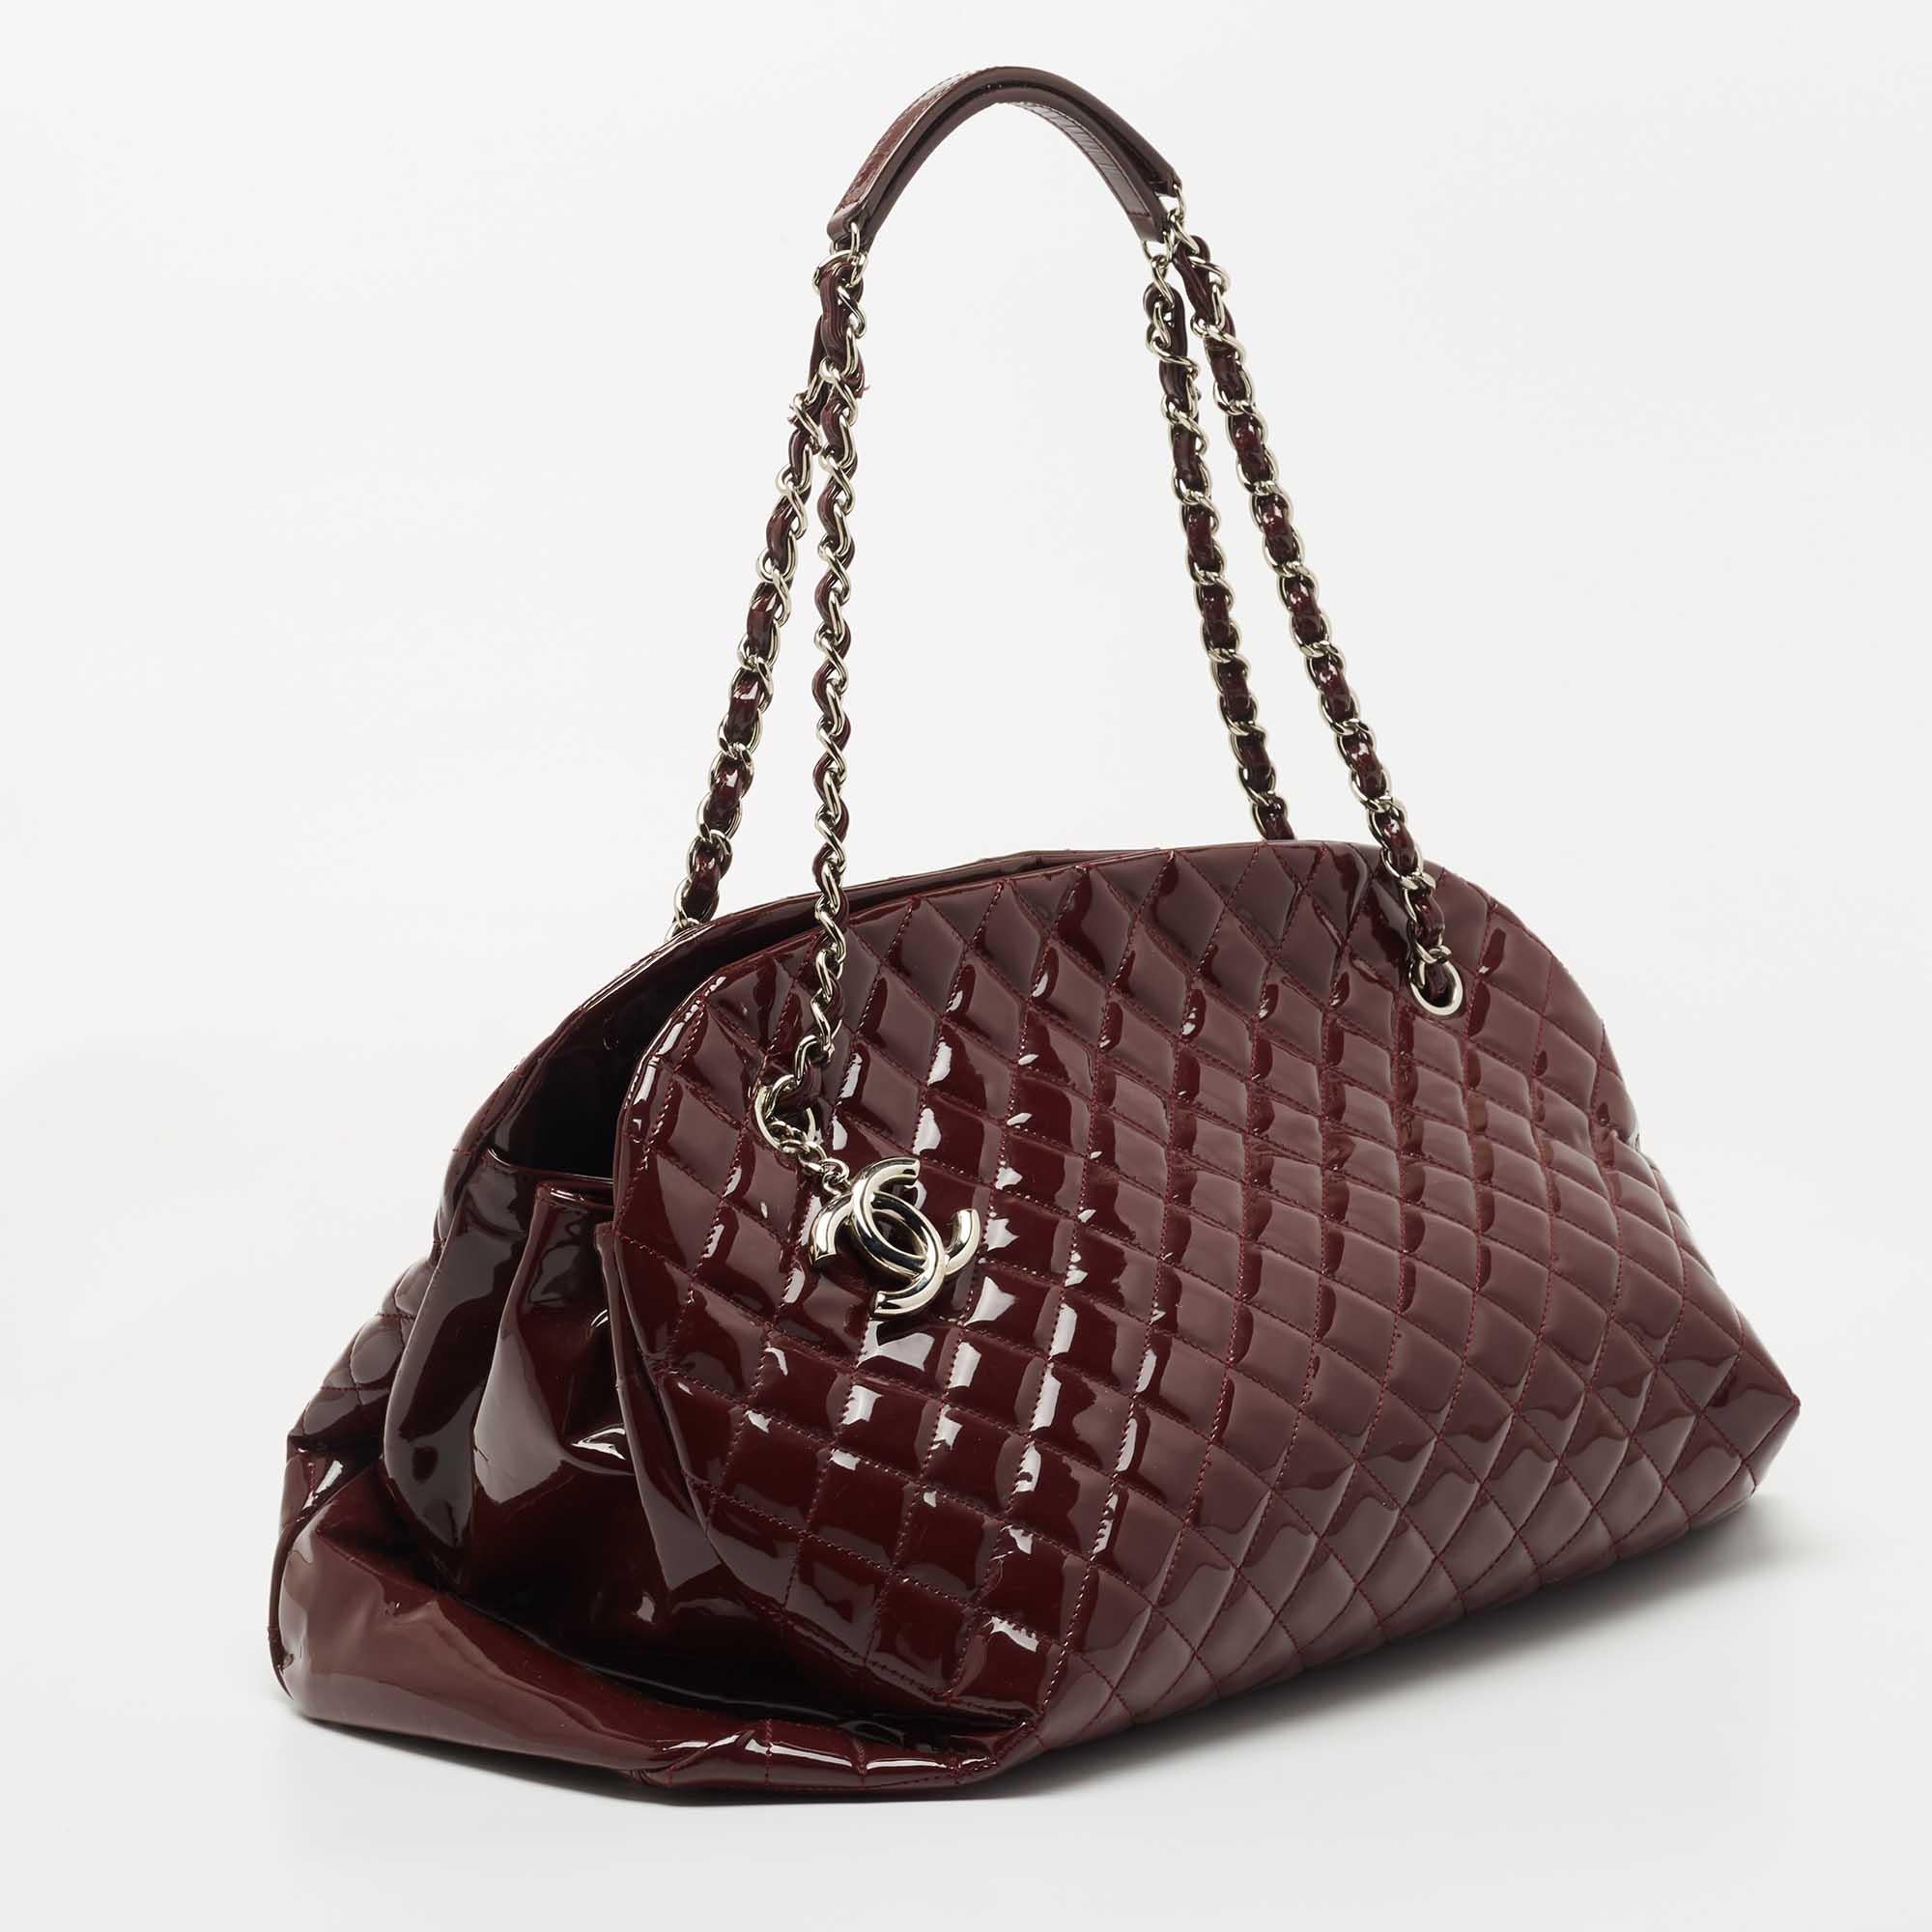 burgundy handbags sale